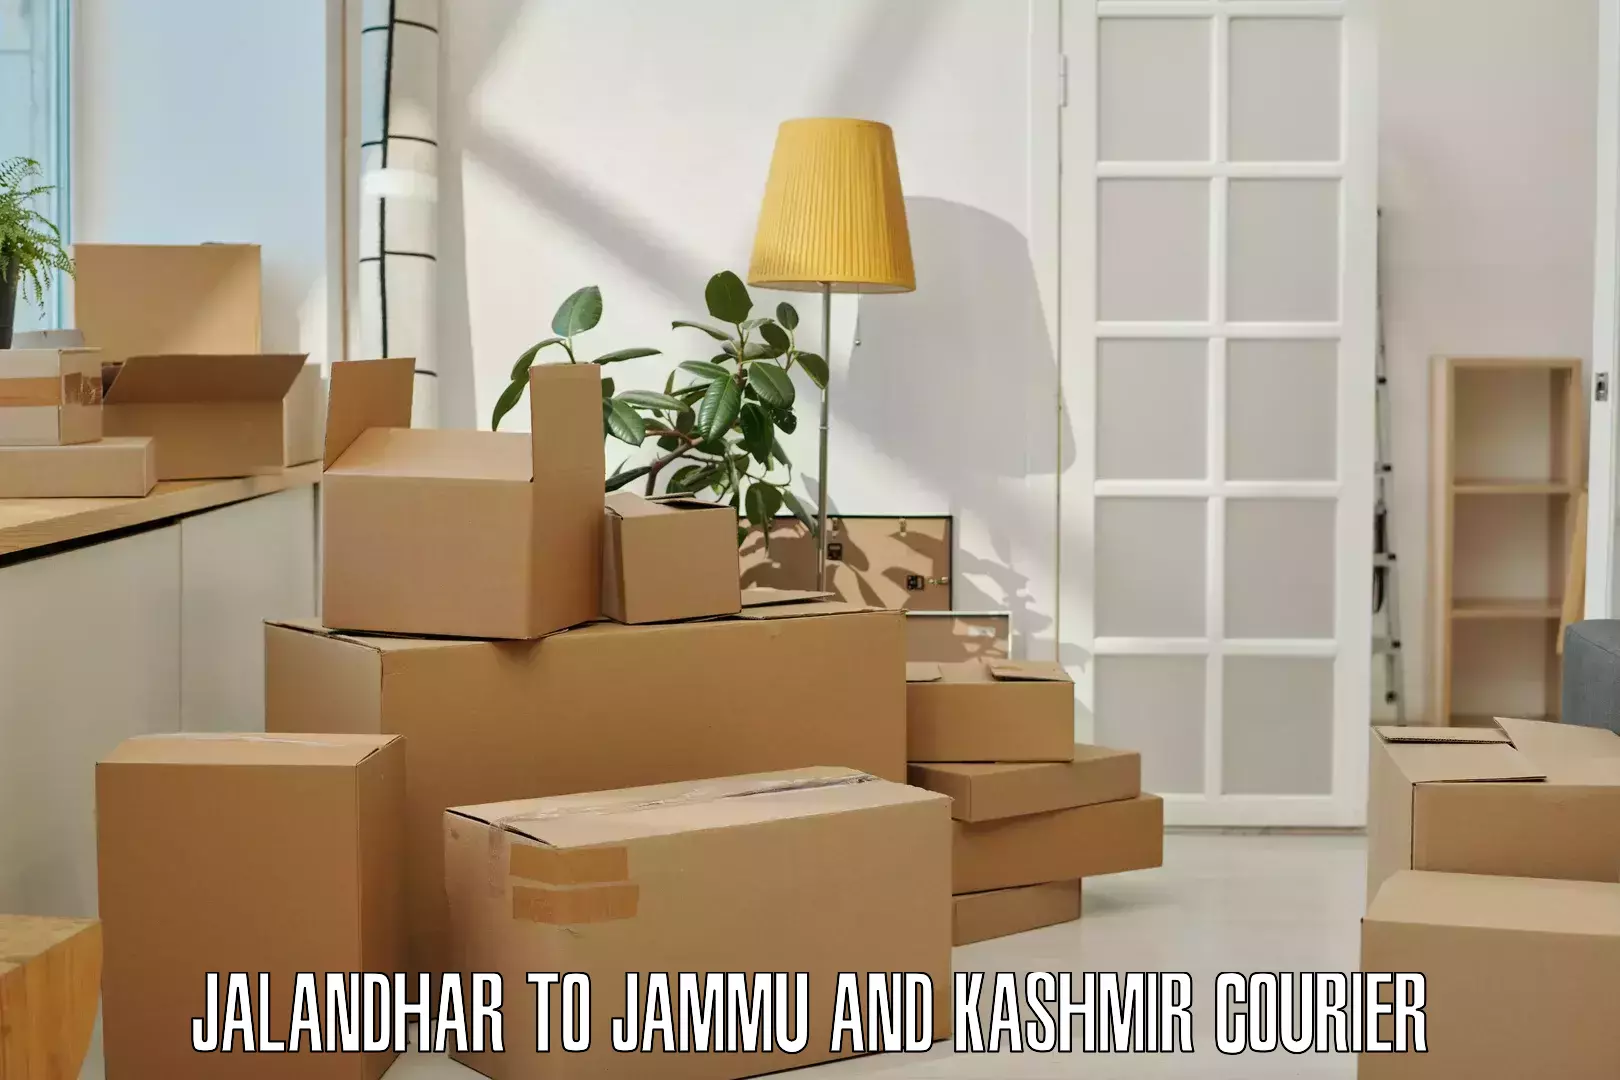 On-demand courier Jalandhar to Rajouri